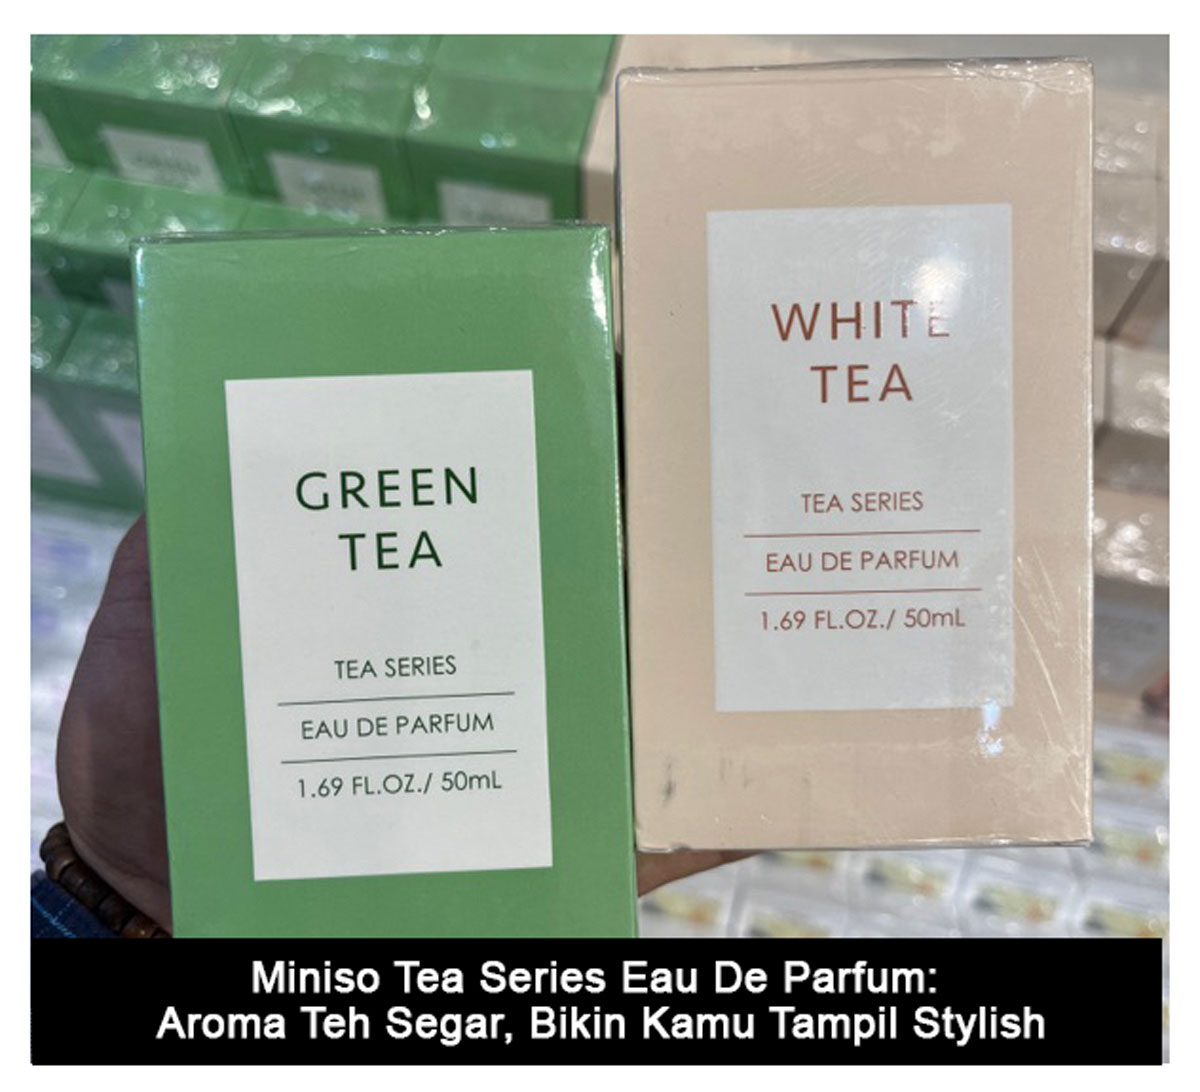 Miniso Tea Series Eau De Parfum: Aroma Teh Segar, Bikin Kamu Tampil Stylish tanpa Merogoh Kocek dalam-dalam!